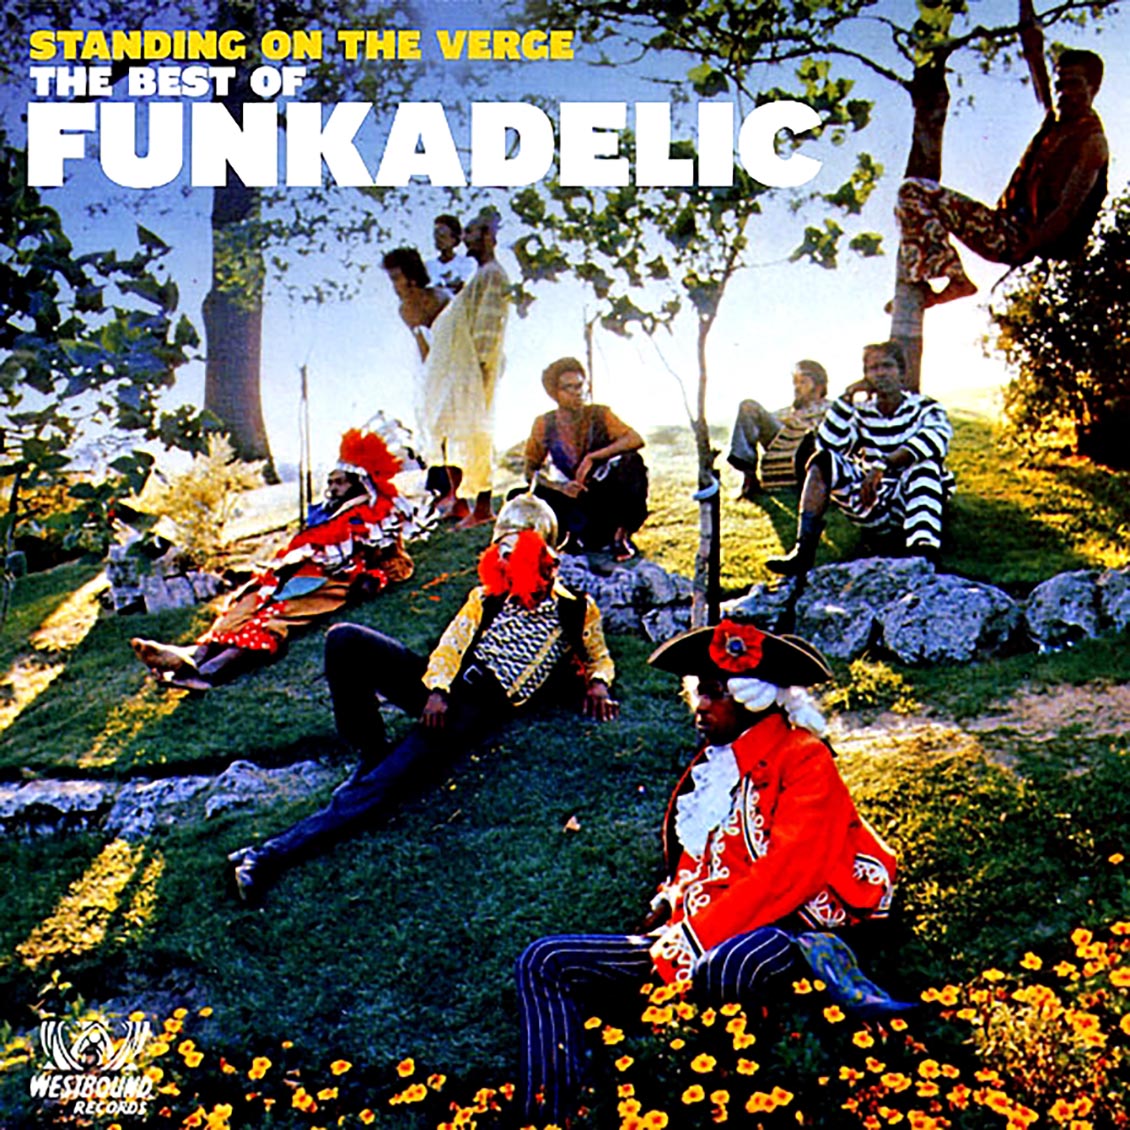 Funkadelic - The Best Of Funkadelic: Standing On The Verge (2xLP) - Vinyl LP